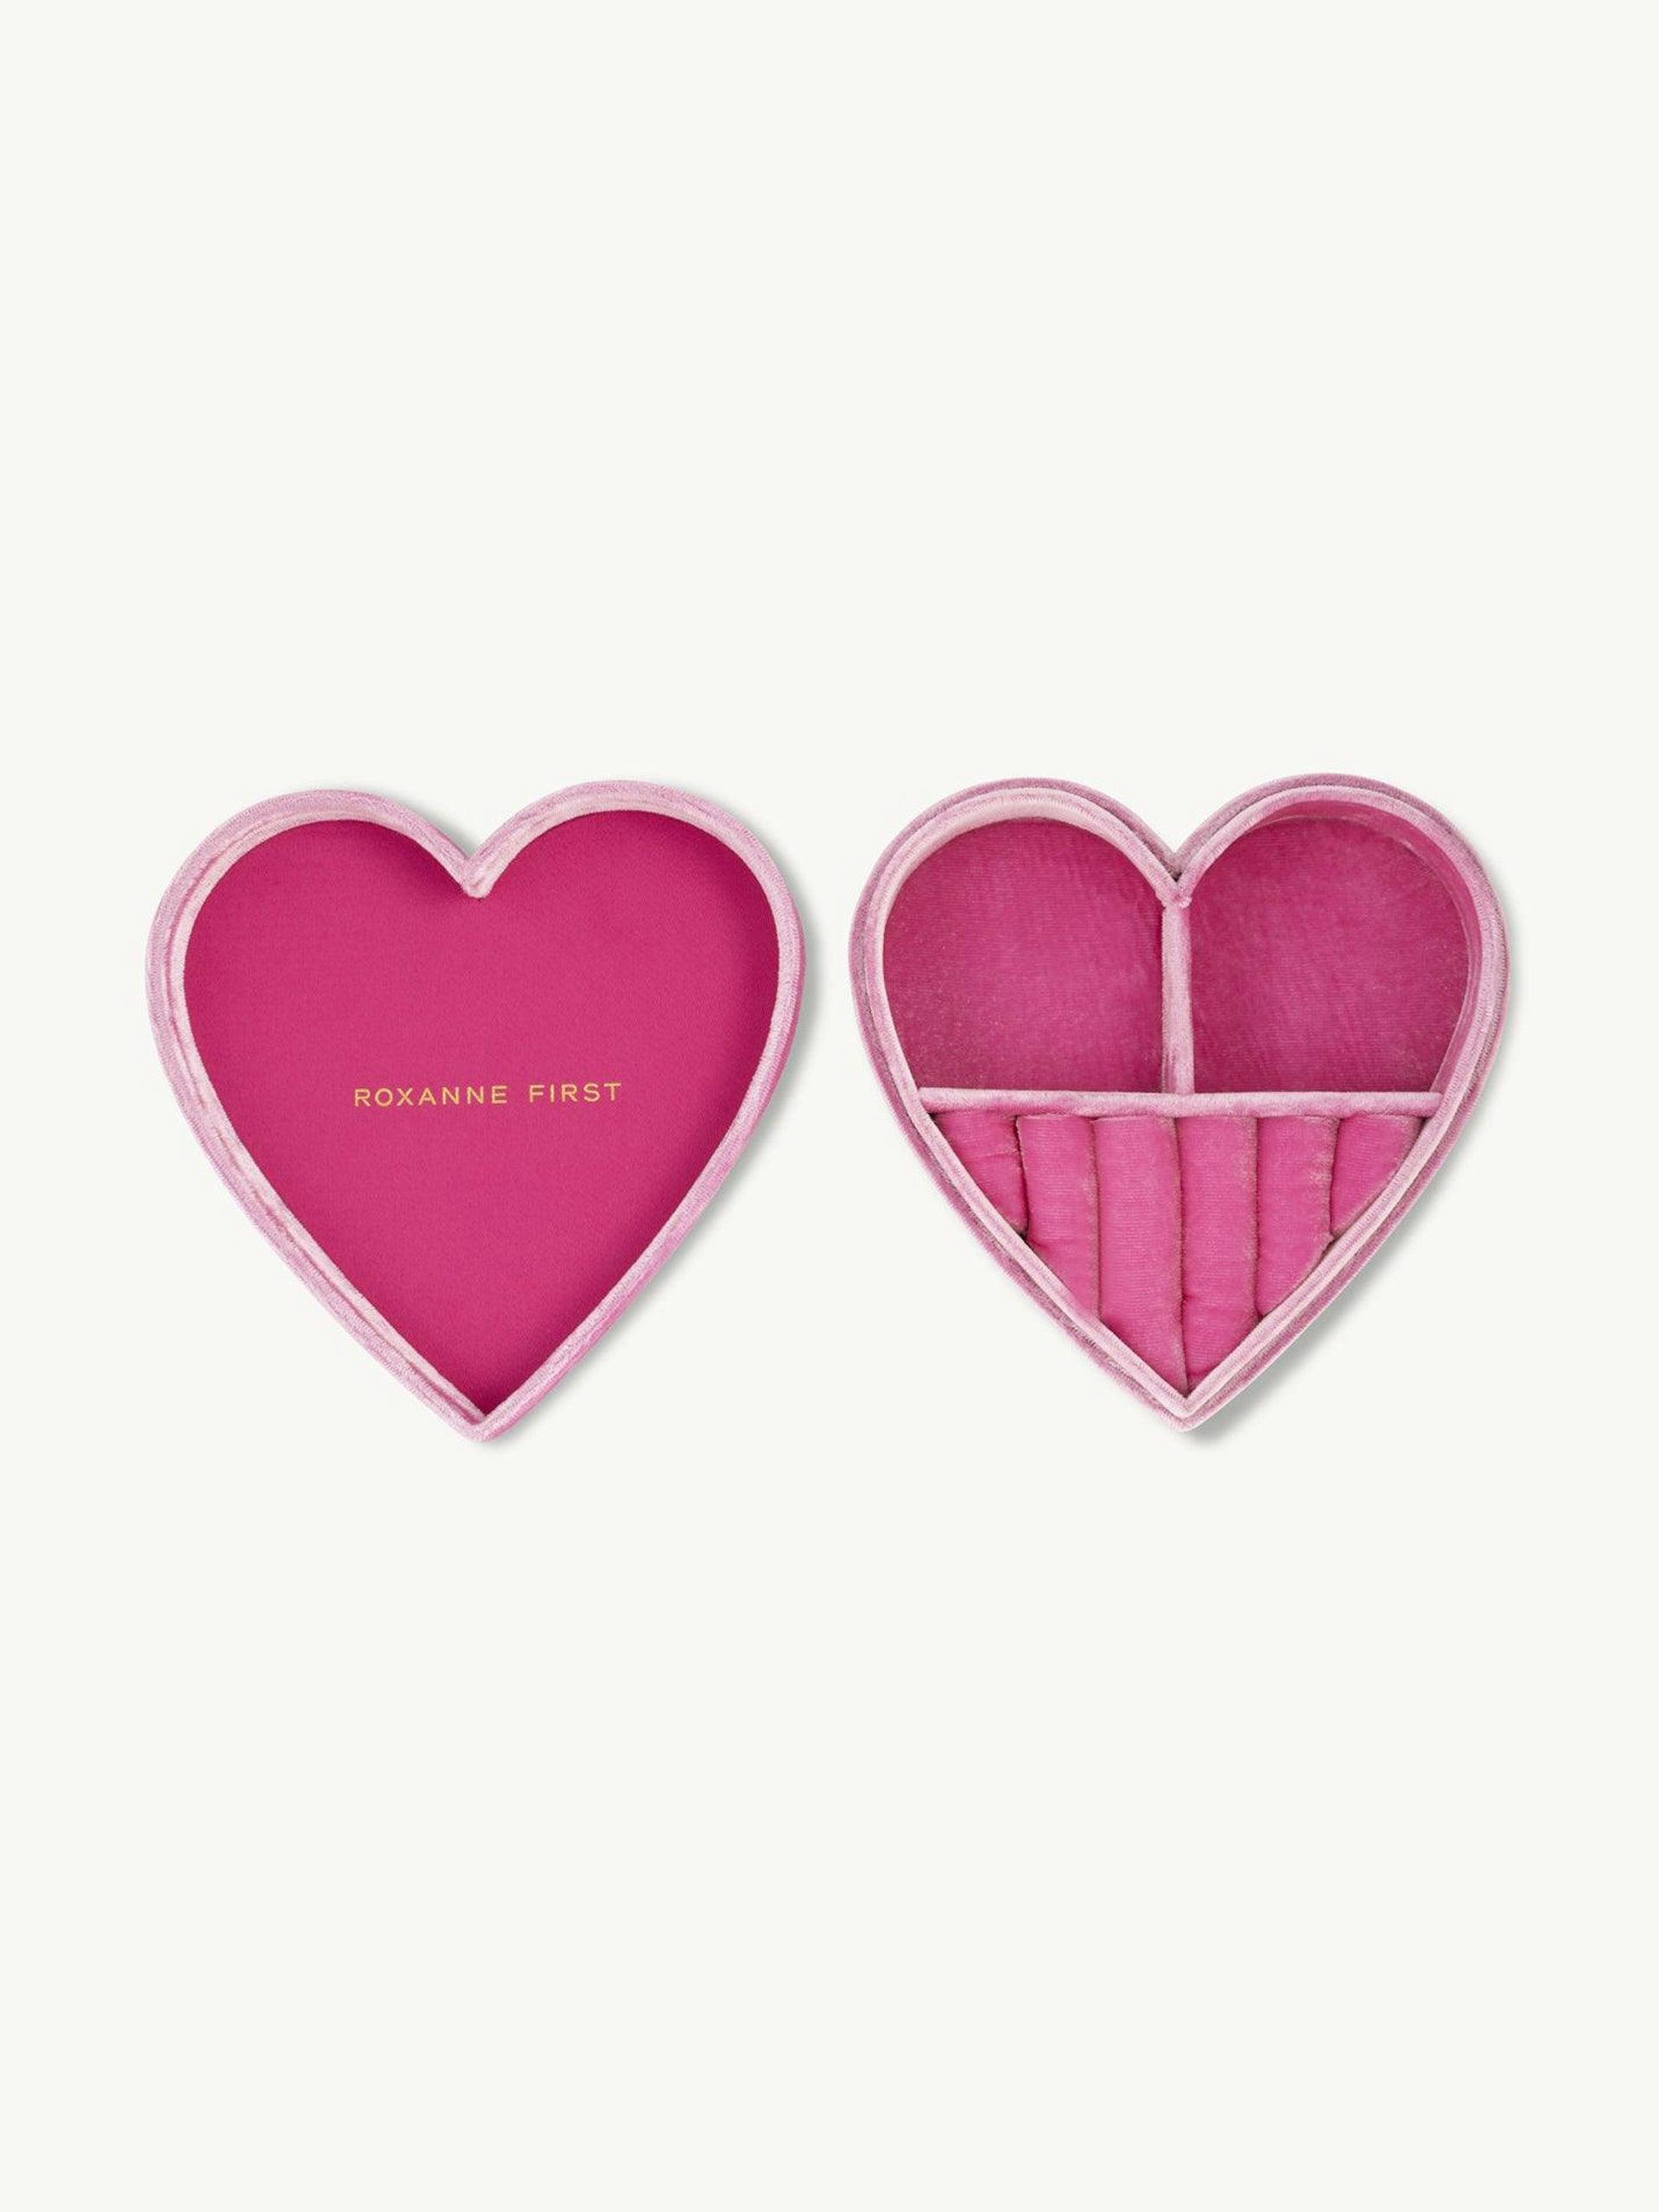 Bubblegum pink heart-shaped jewelley box